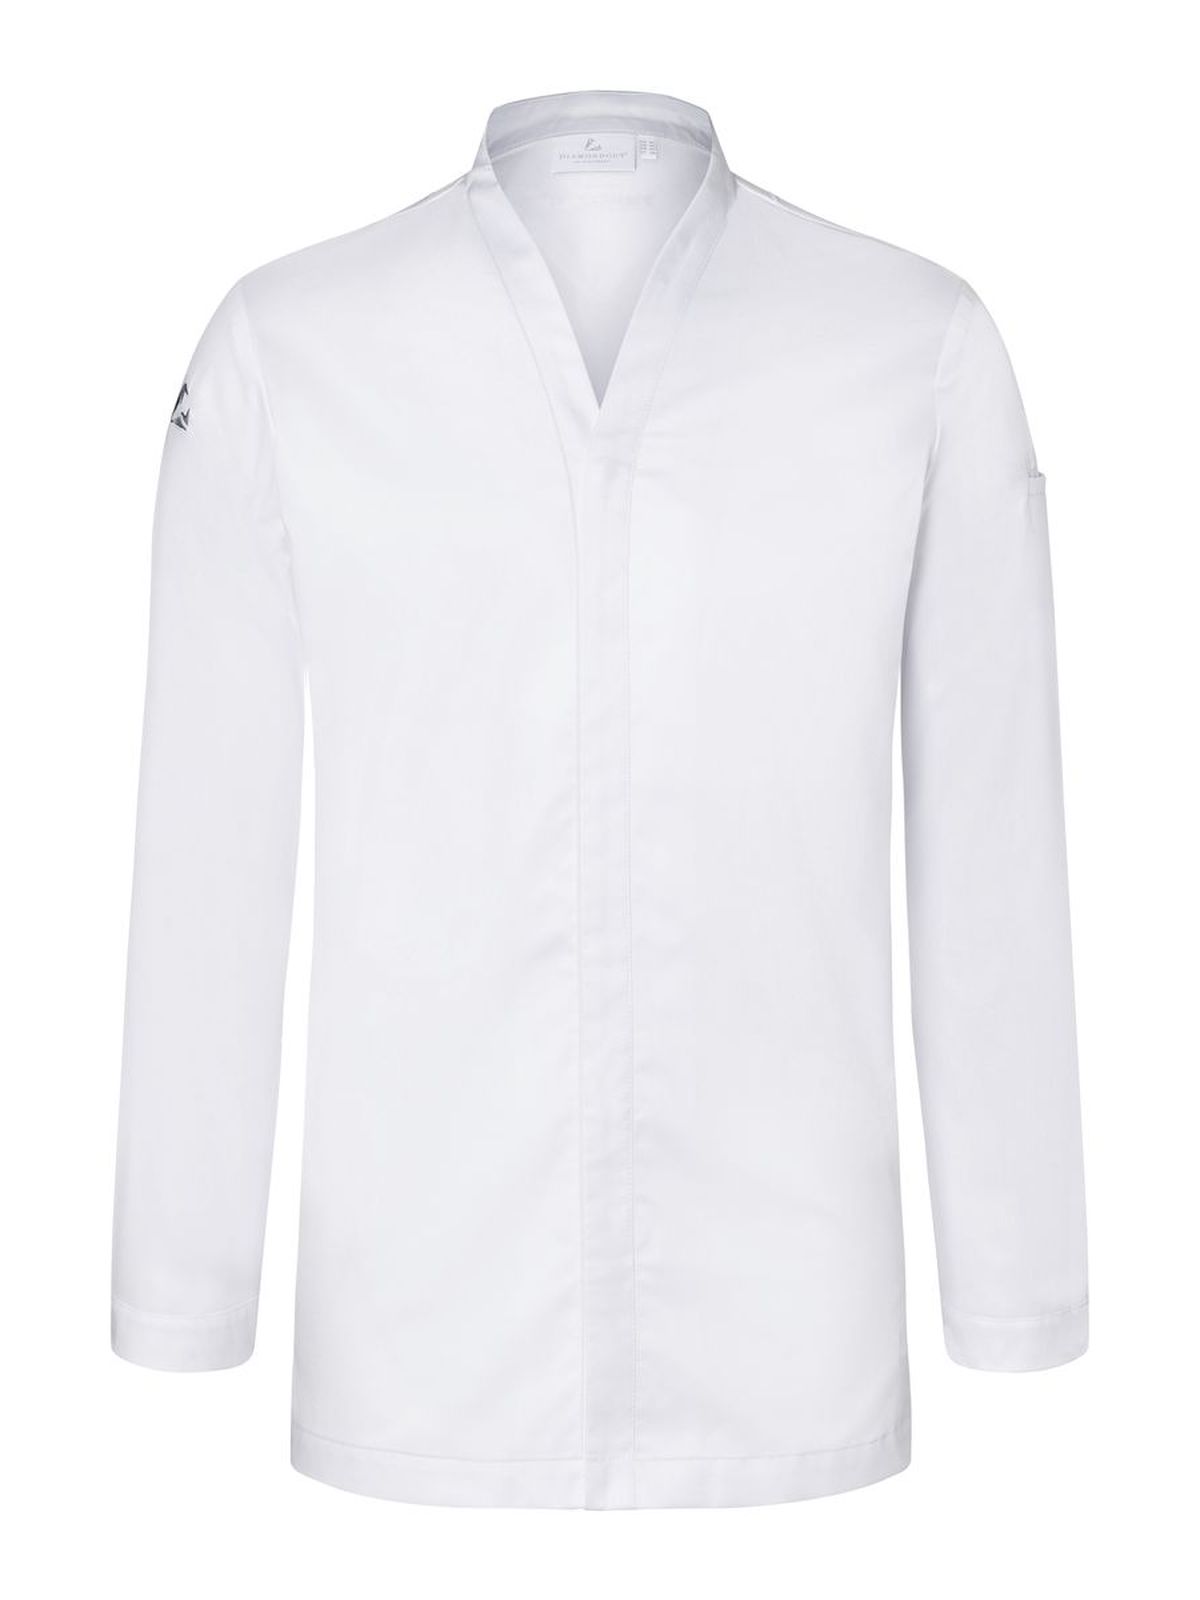 chef-jacket-diamond-cutr-couture-white.webp